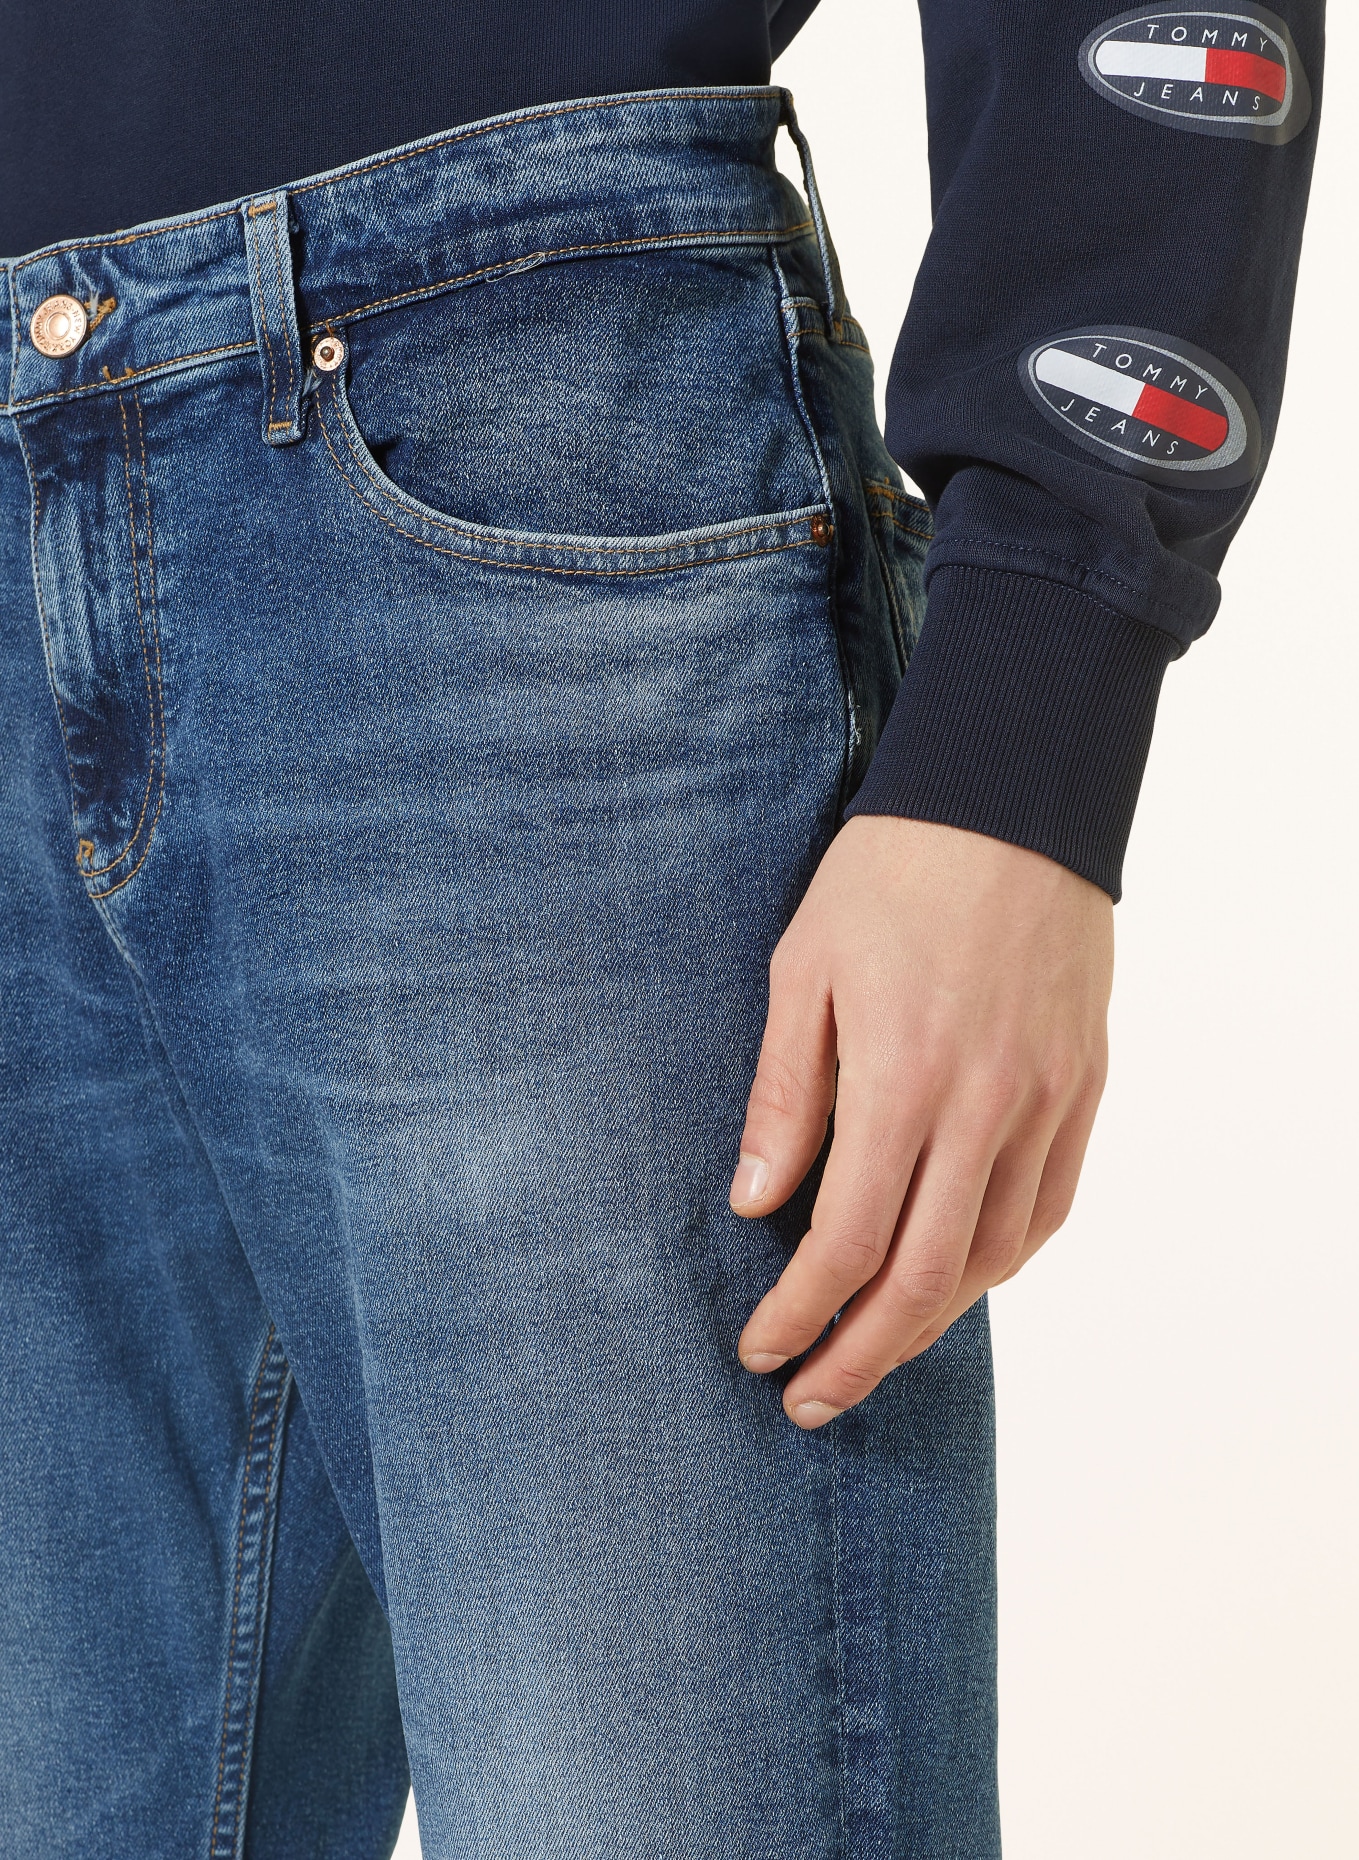 TOMMY JEANS Jeans RYAN Regular Straight Fit, Farbe: 1BK Denim Dark (Bild 5)